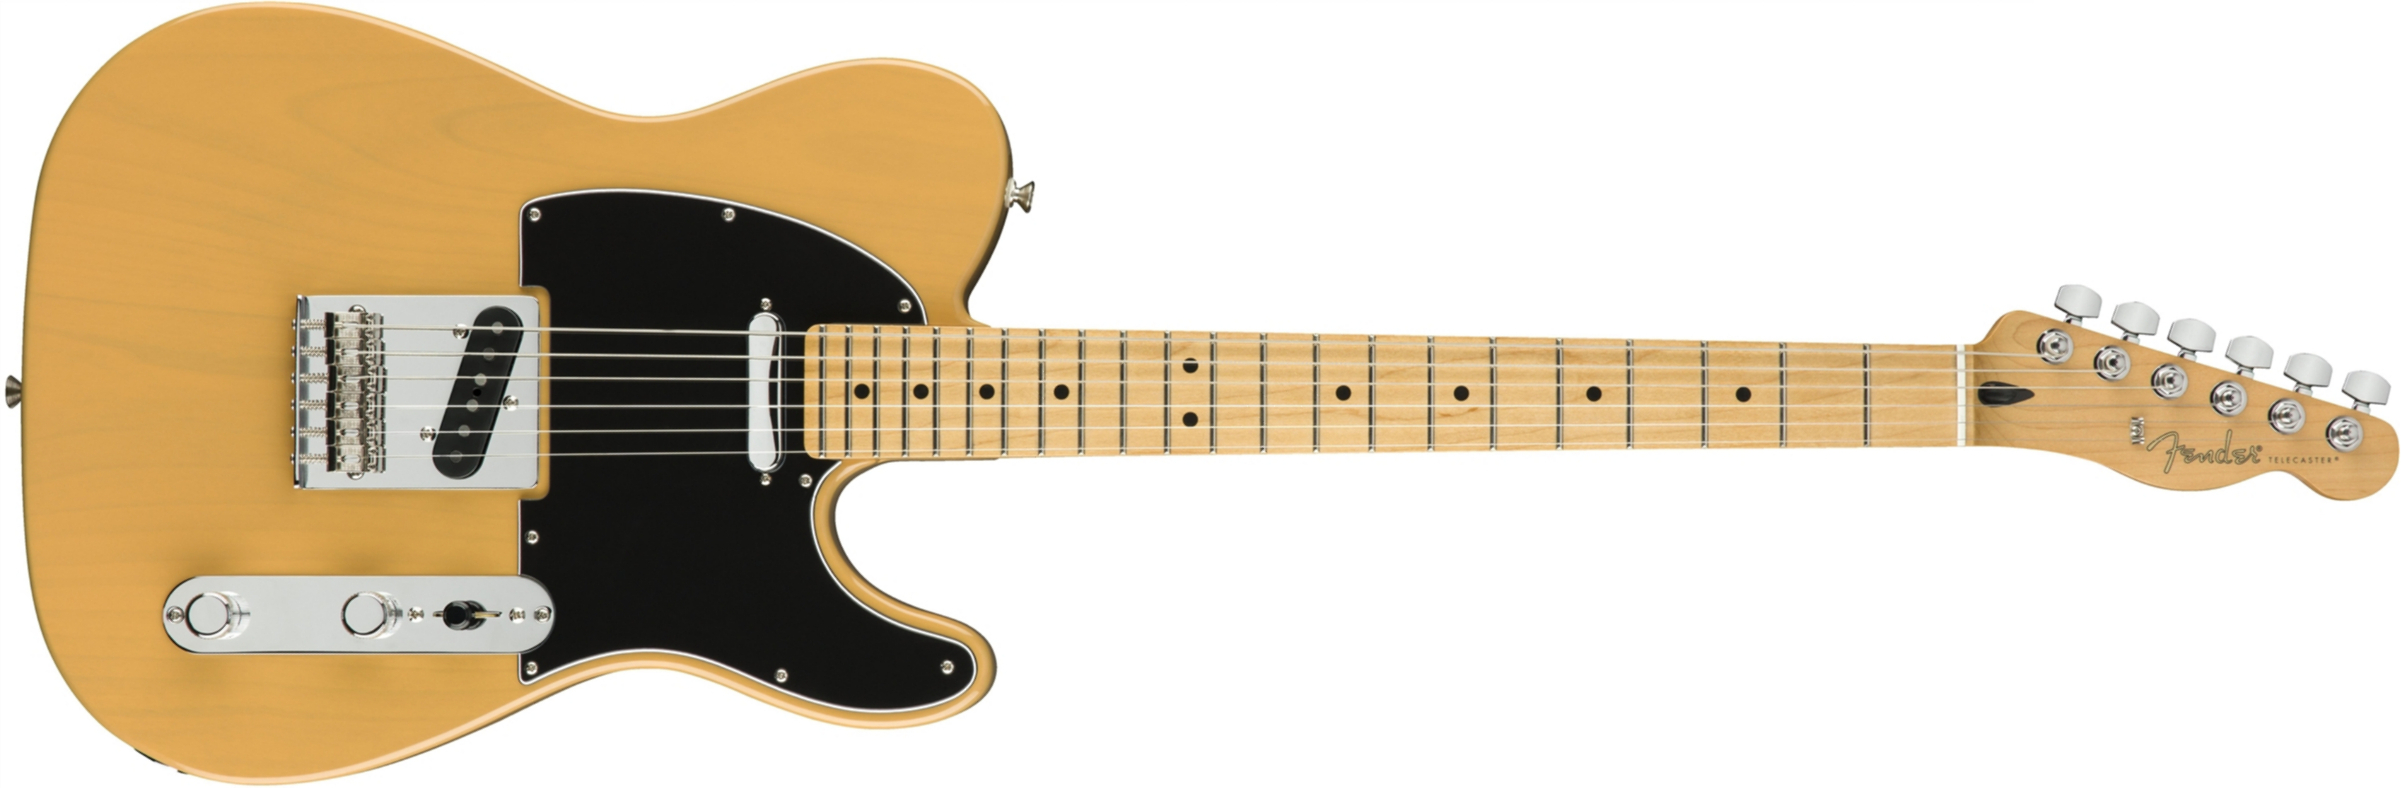 Fender Tele Player Mex Mn - Butterscotch Blonde - E-Gitarre in Teleform - Main picture